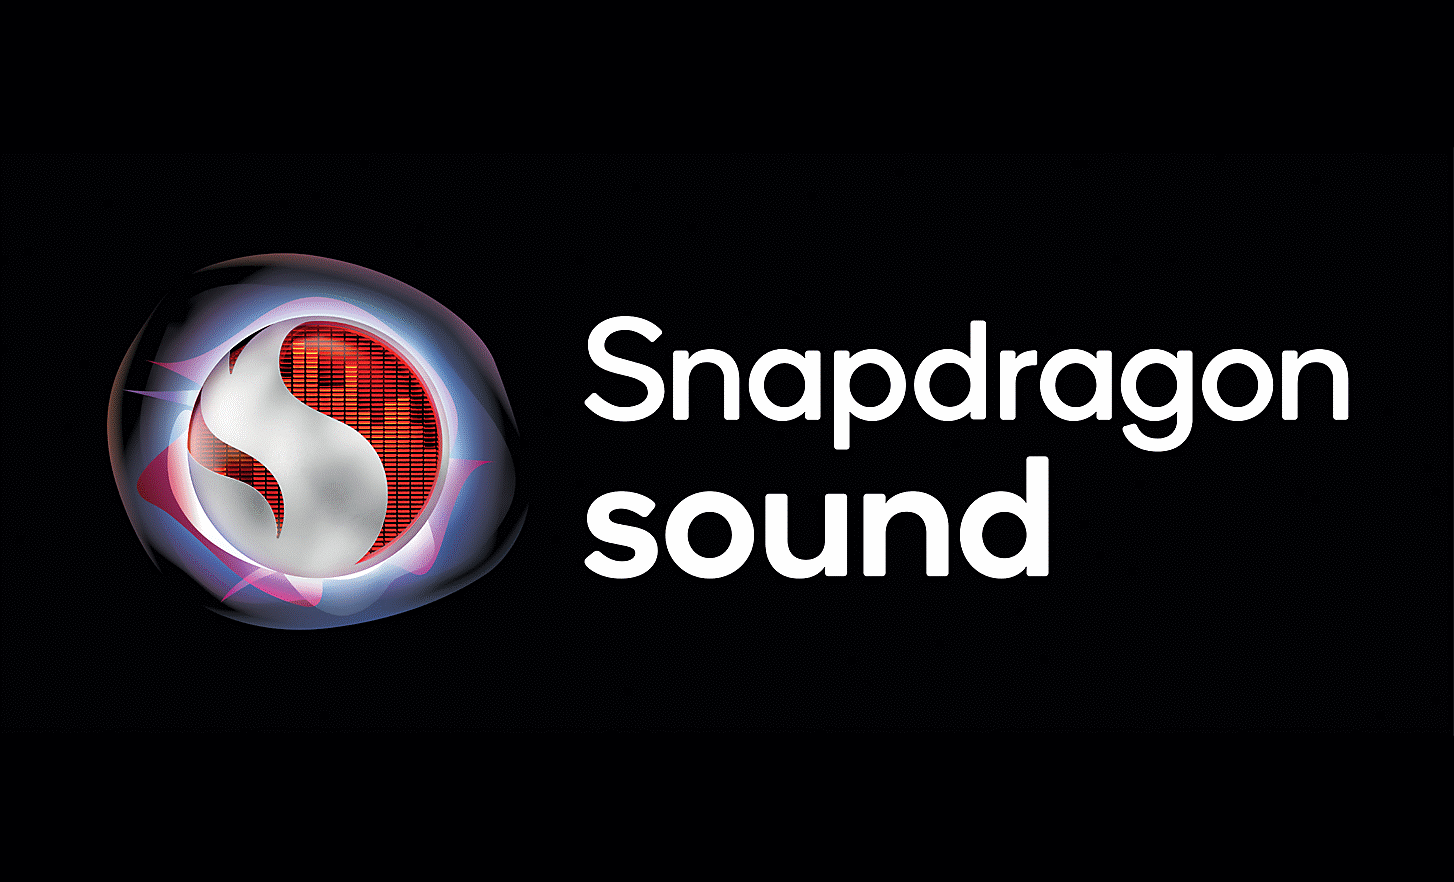 Image of a Snapdragon sound logo on a black background